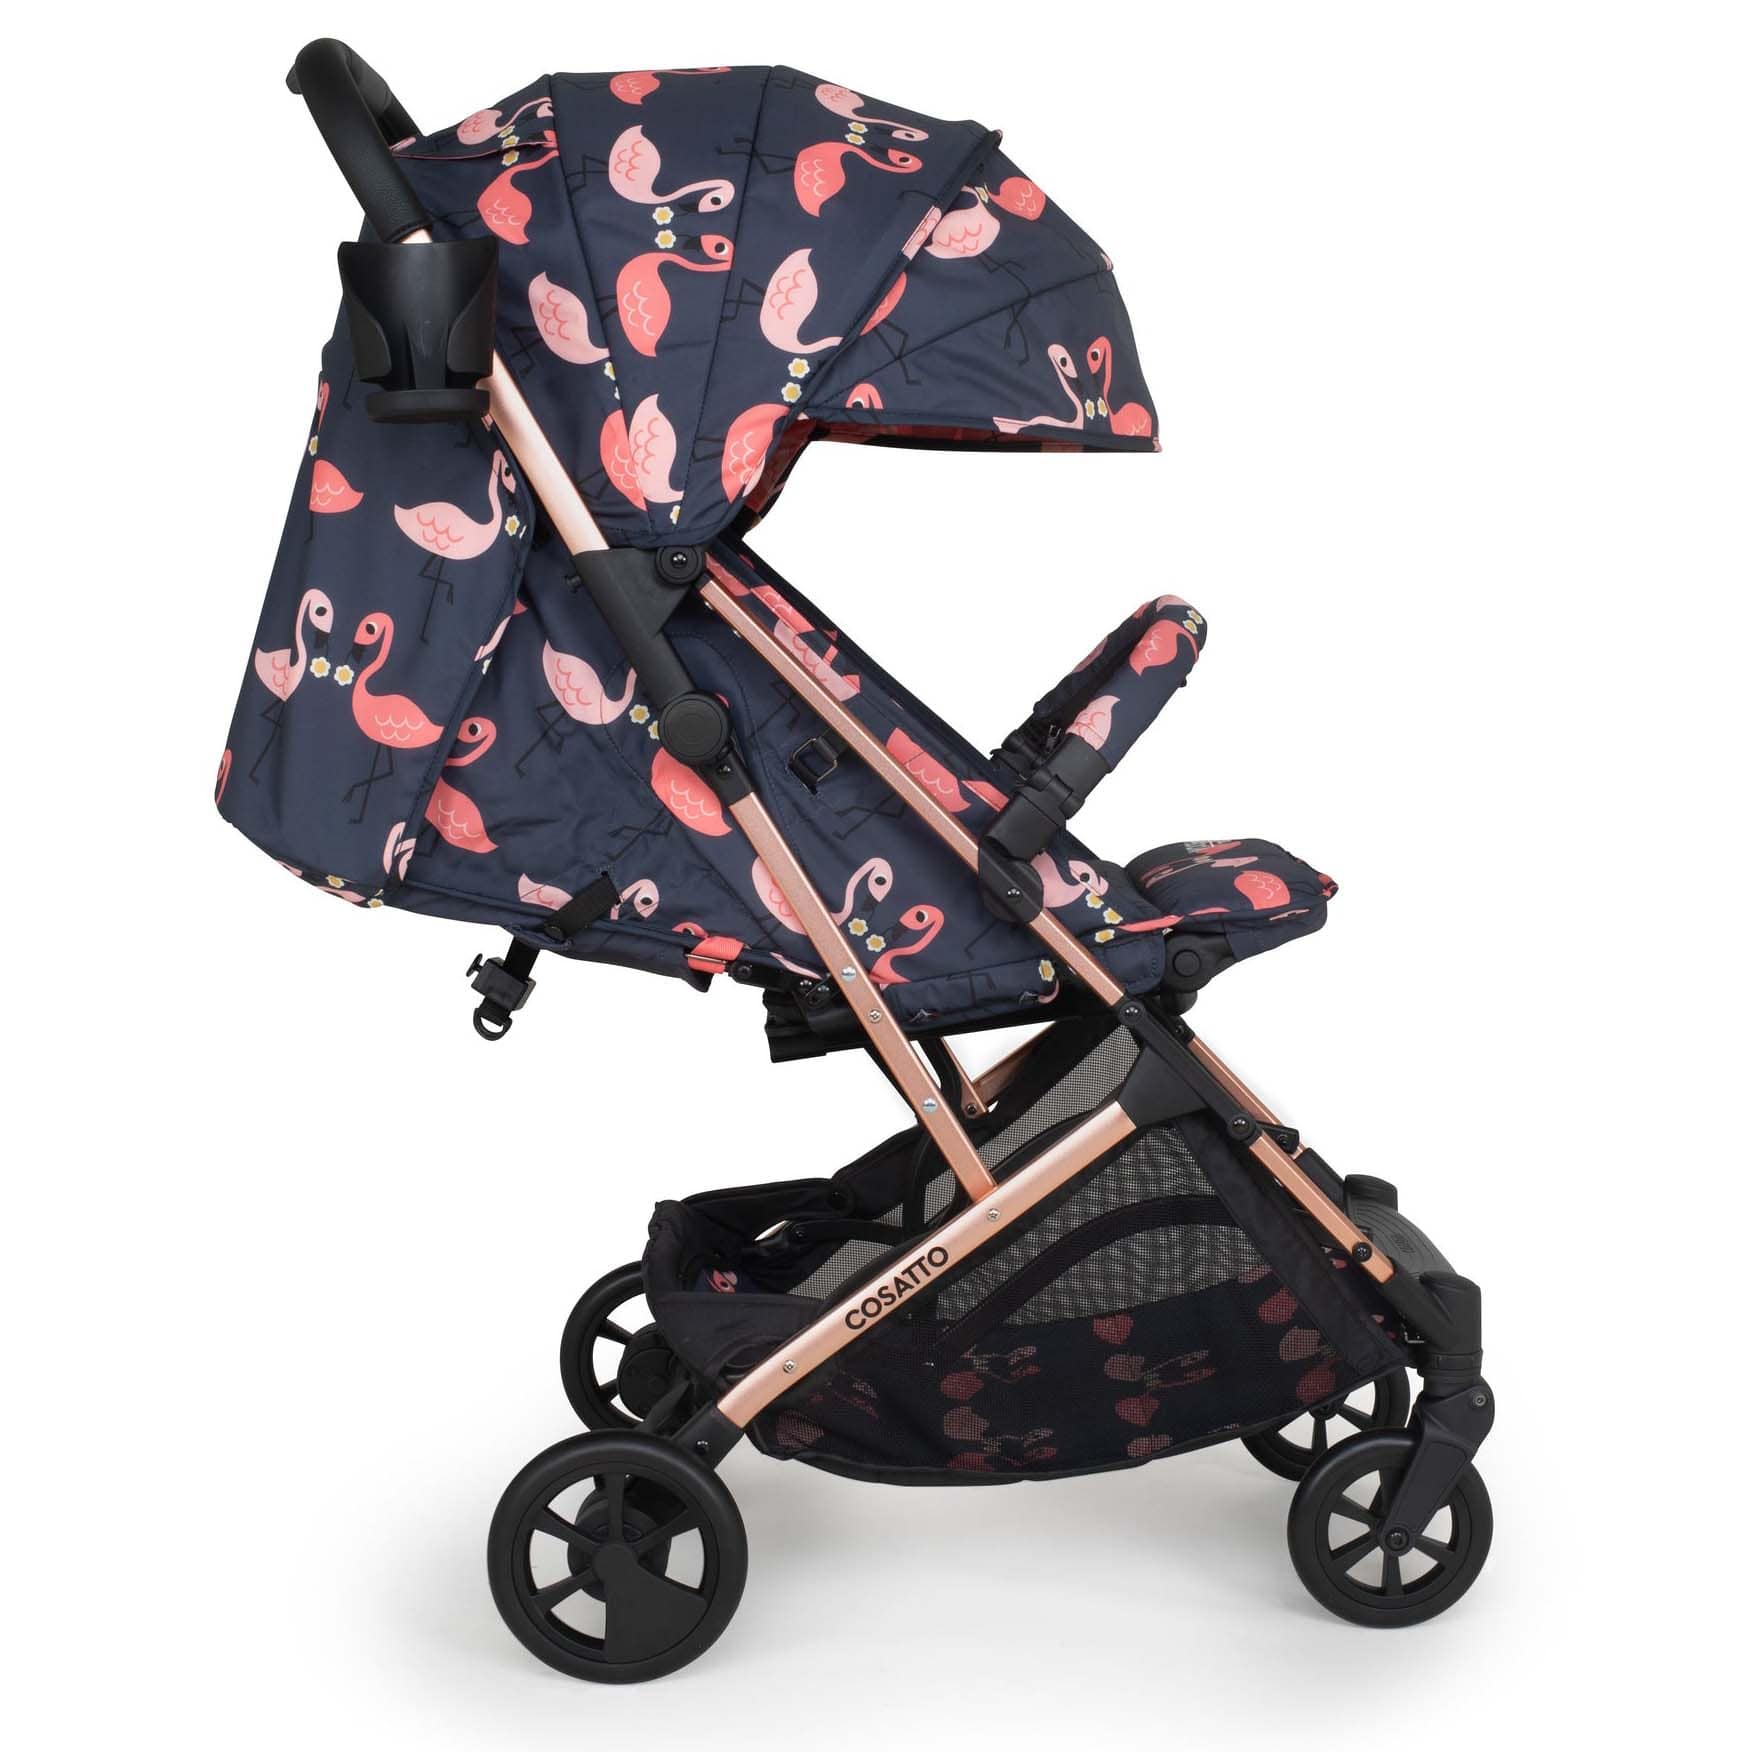 Cosatto baby pushchairs Cosatto Woosh 3 Stroller Pretty Flamingo CT5052